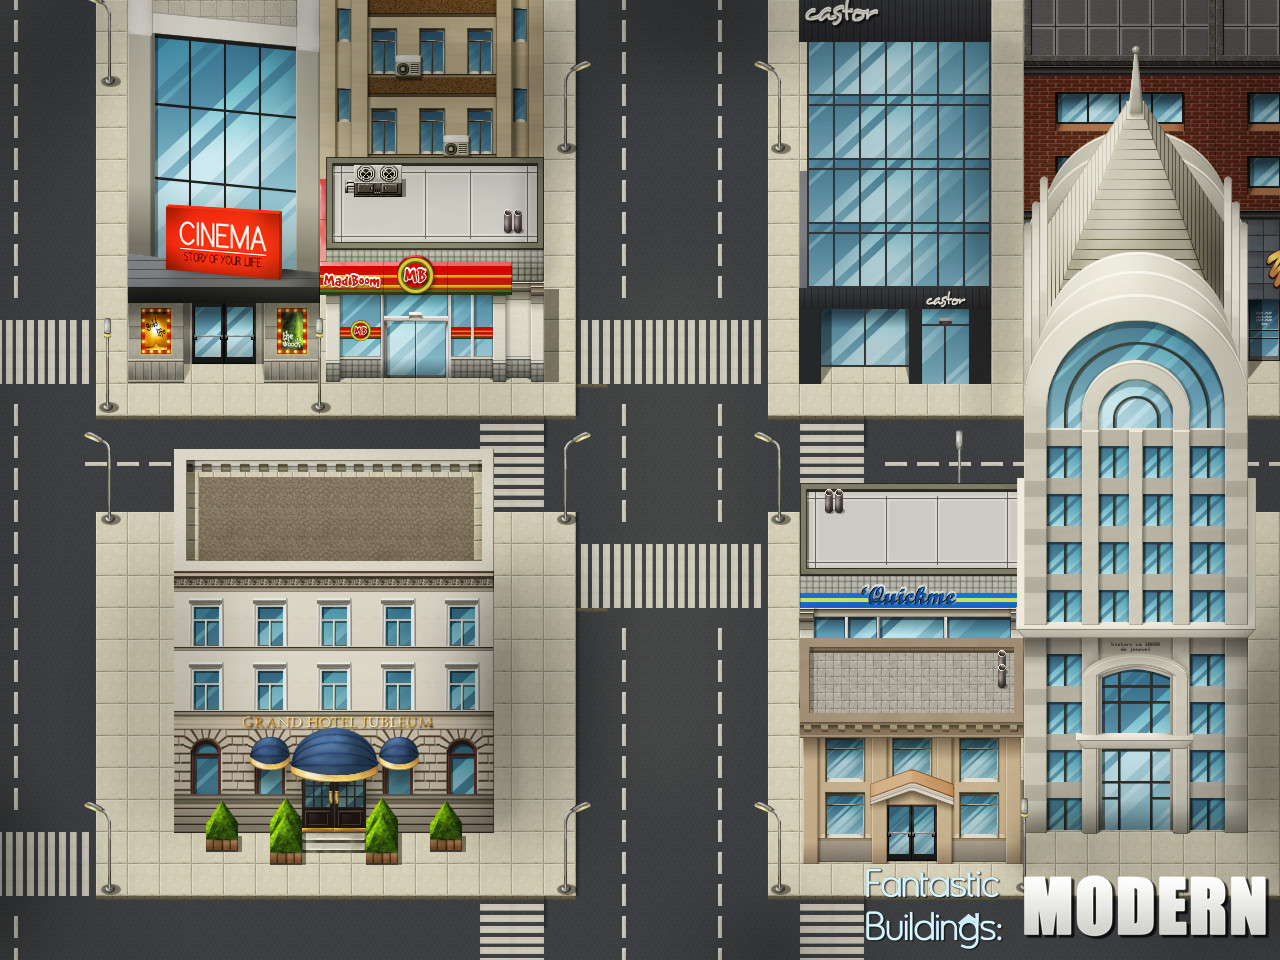 RPG Maker VX - Ace Fantastic Buildings: Modern DLC EU Steam CD Key [$ 5.07]